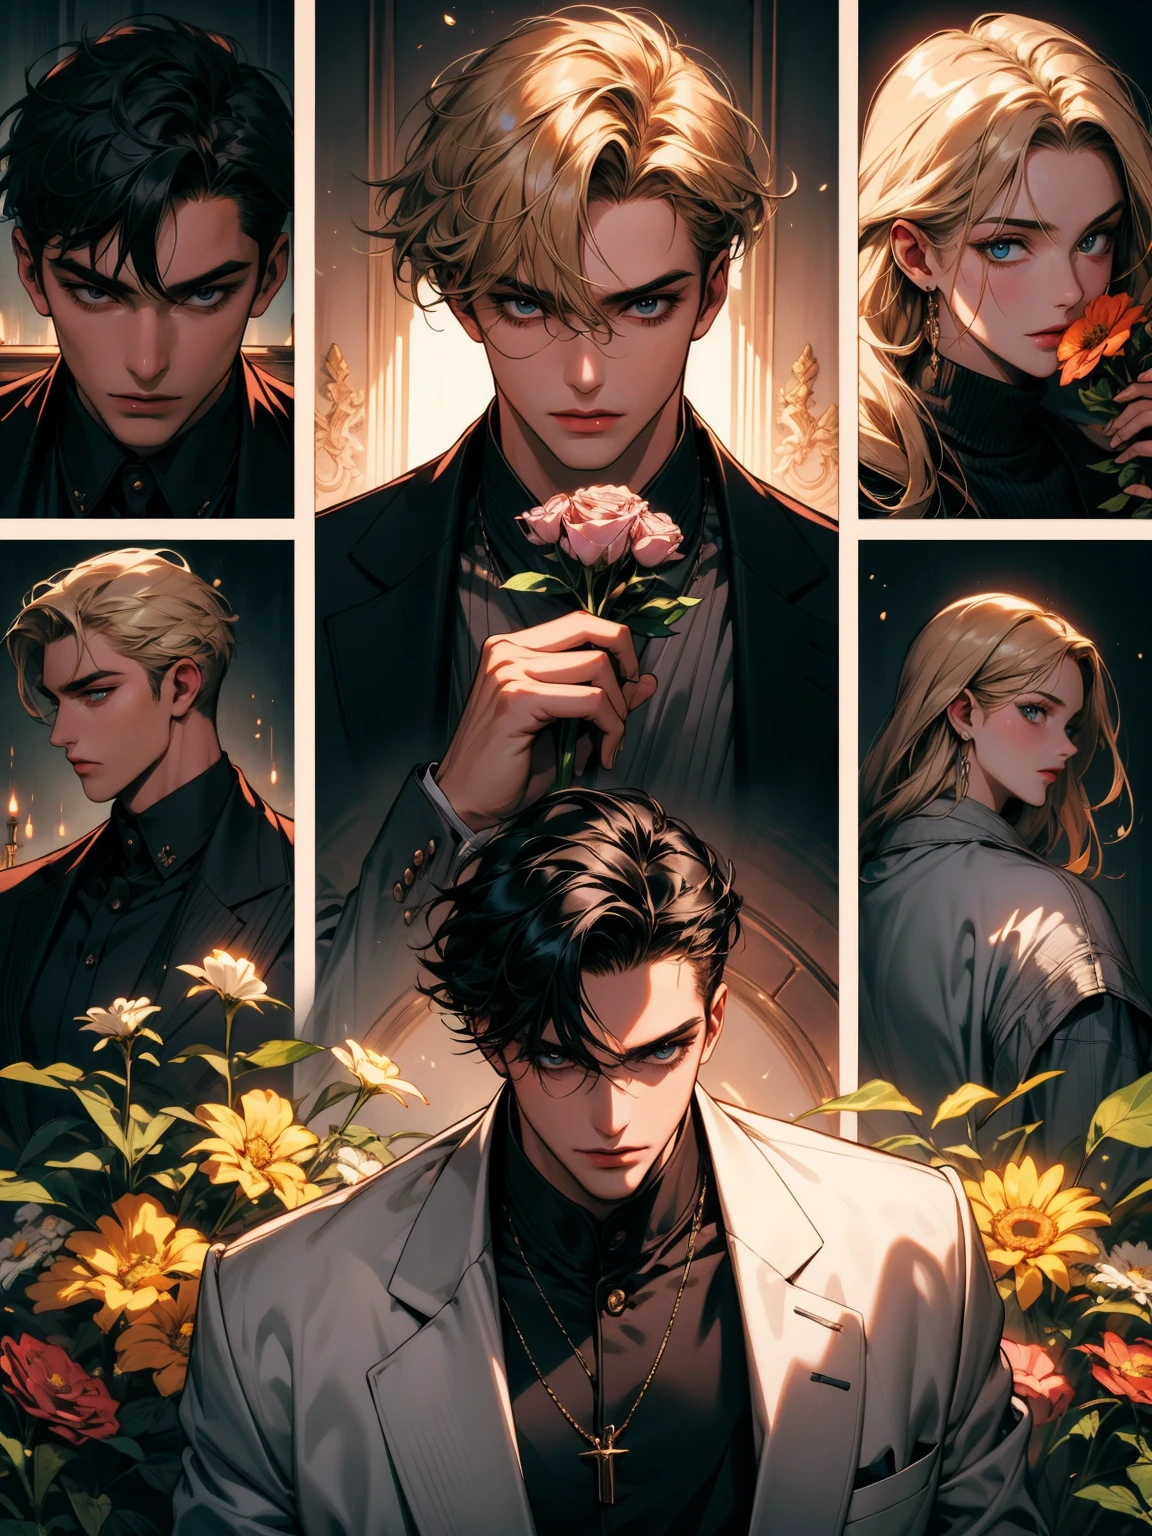 masterpiece, collage of man holding flowers, blond hair, black hair, white hair